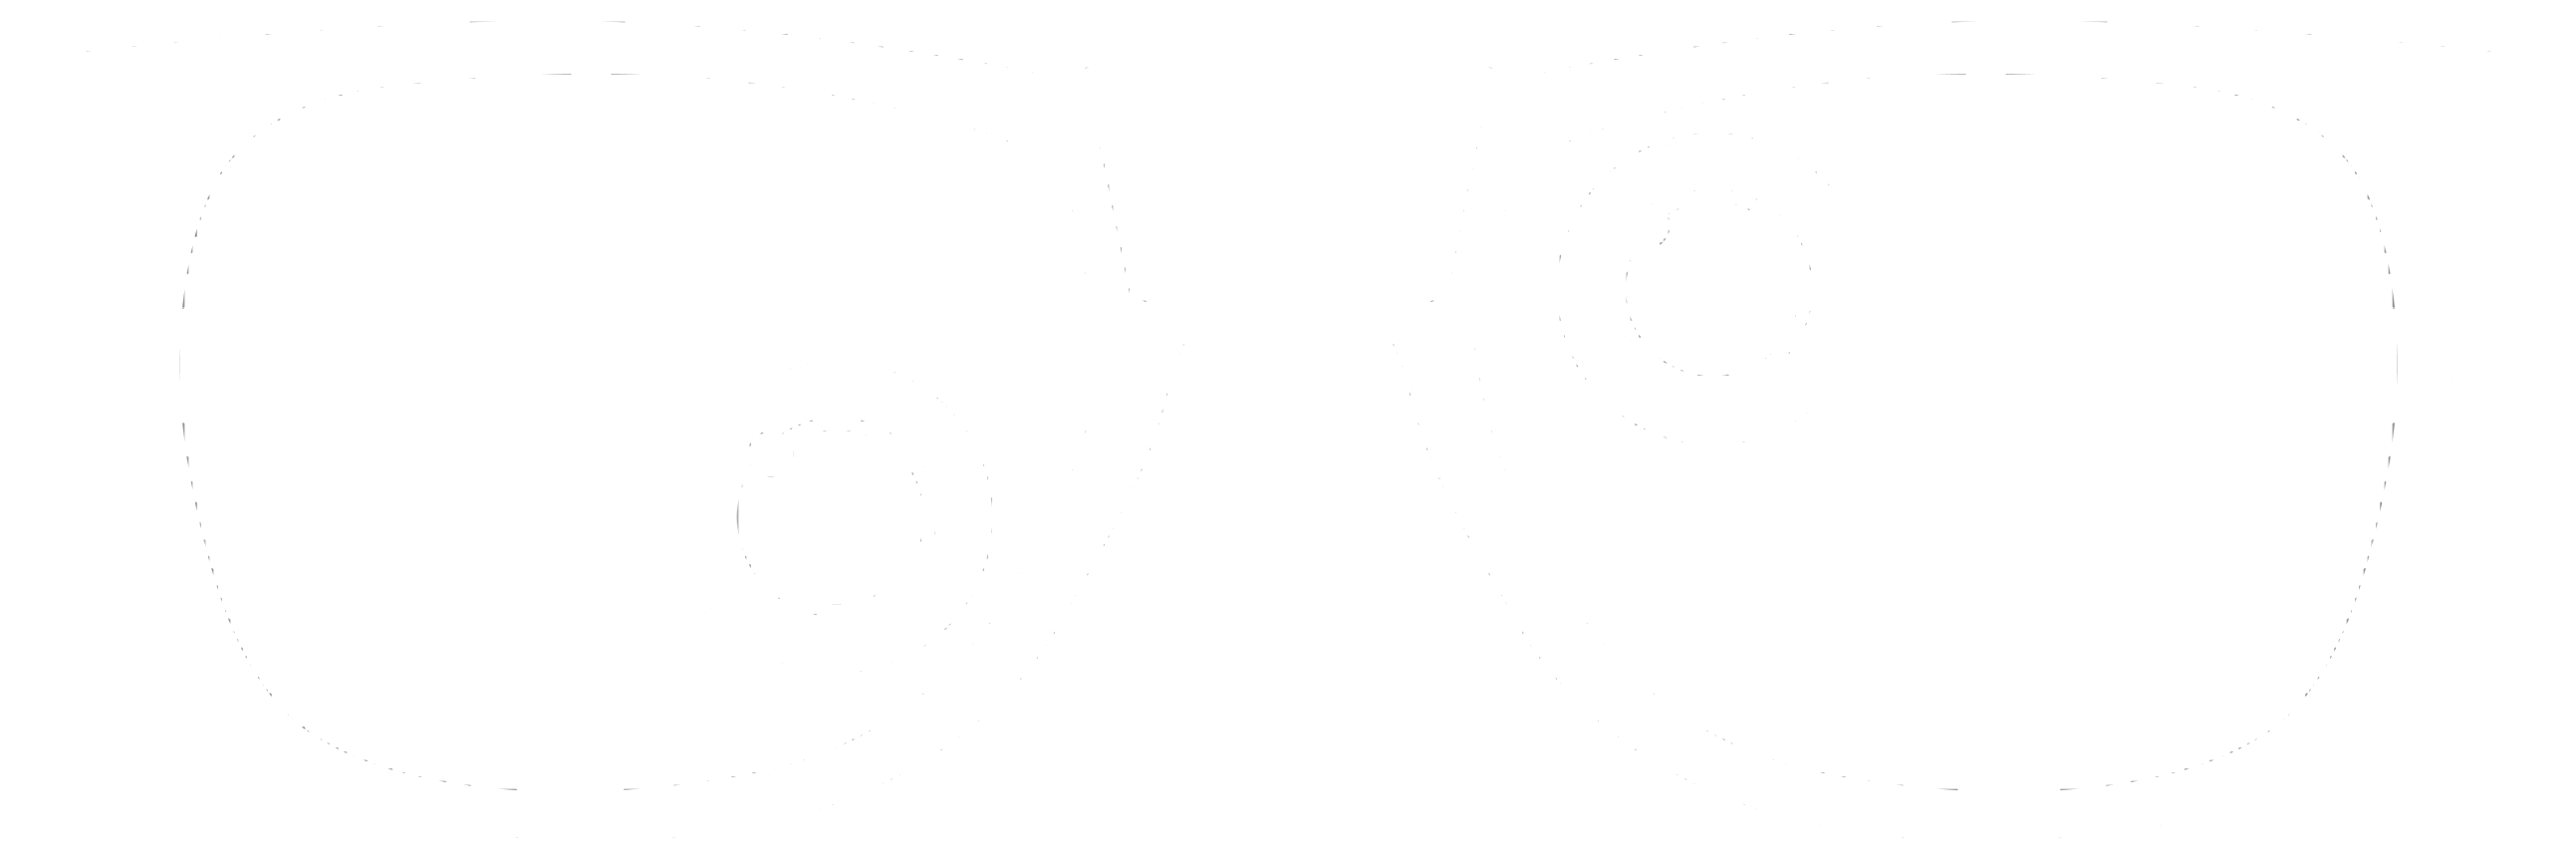 vision clipart nerd glass